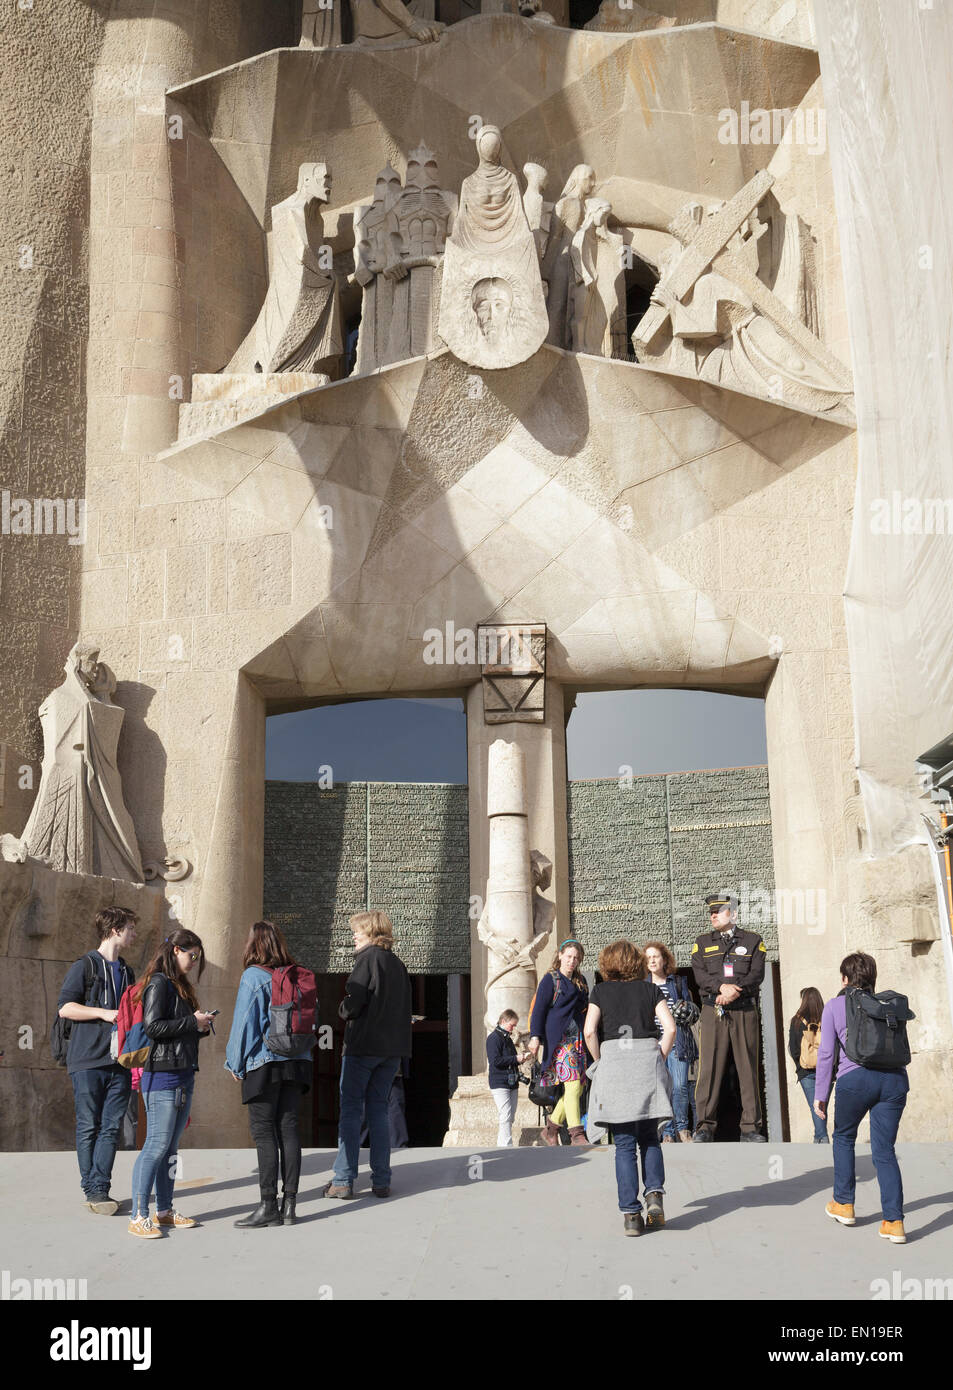 Les gens qui entrent dans la Sagrada Familia, Barcelone, Catalogne, Espagne Banque D'Images